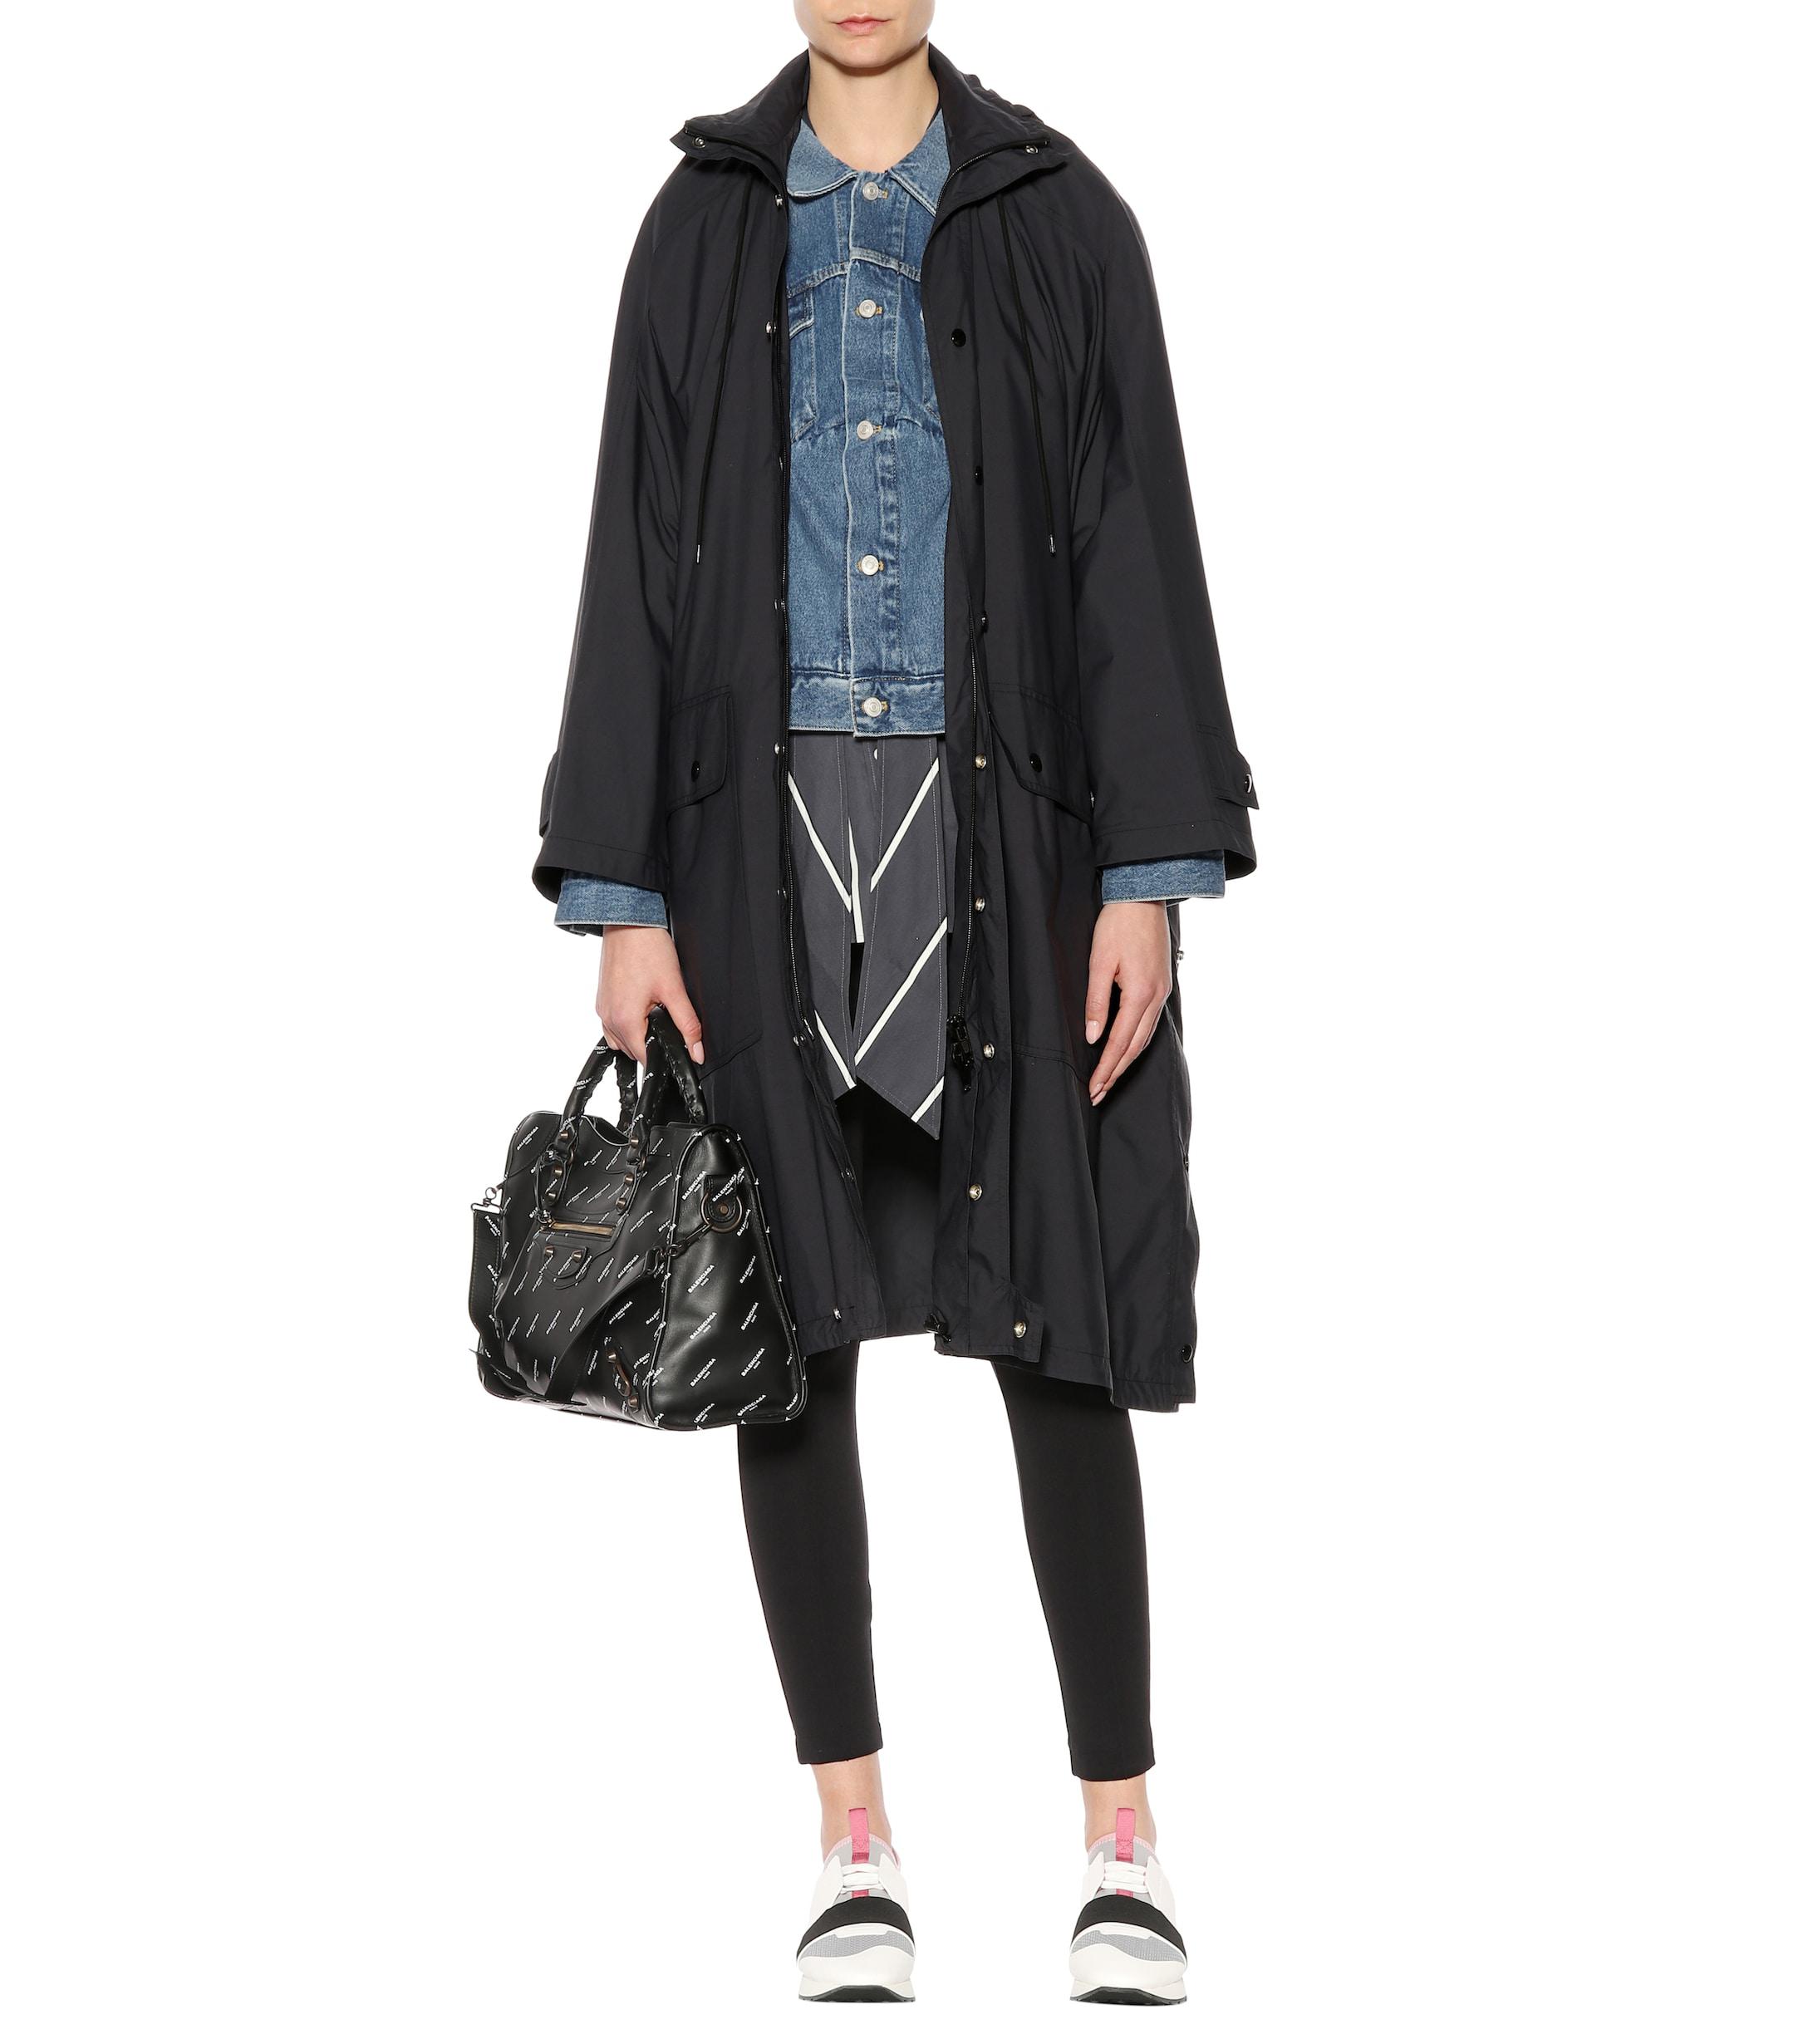 Balenciaga Oversized Raincoat in Black - Lyst